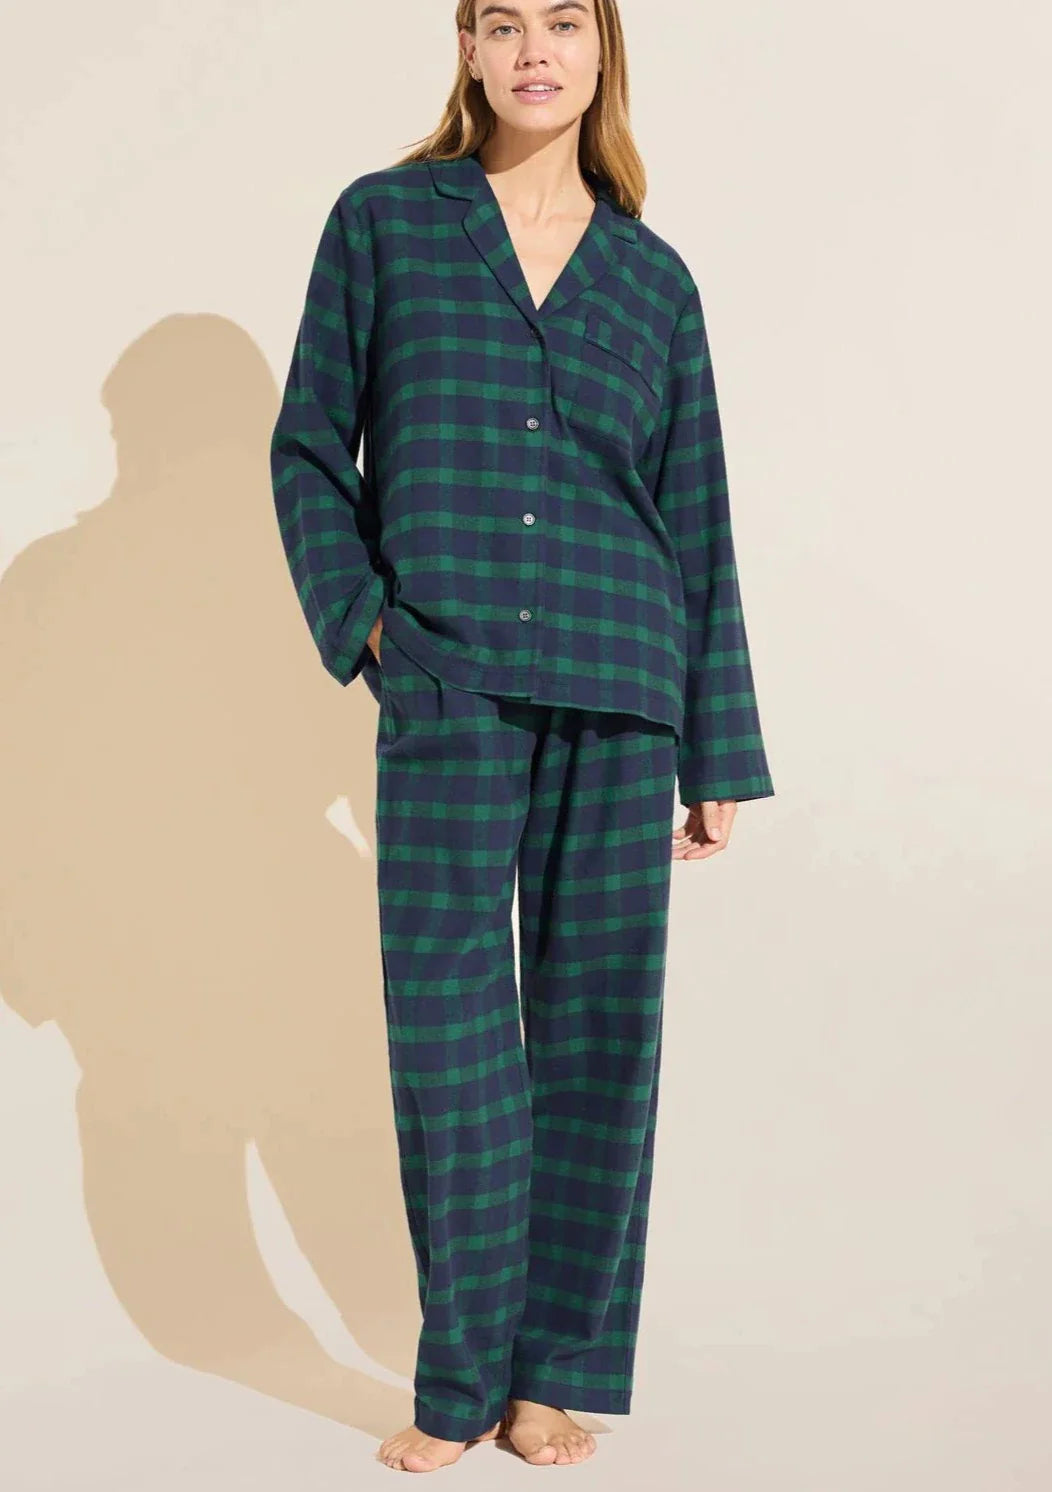 Eberjey Gisele Printed Flannel Long PJ Set - Navy Plaid